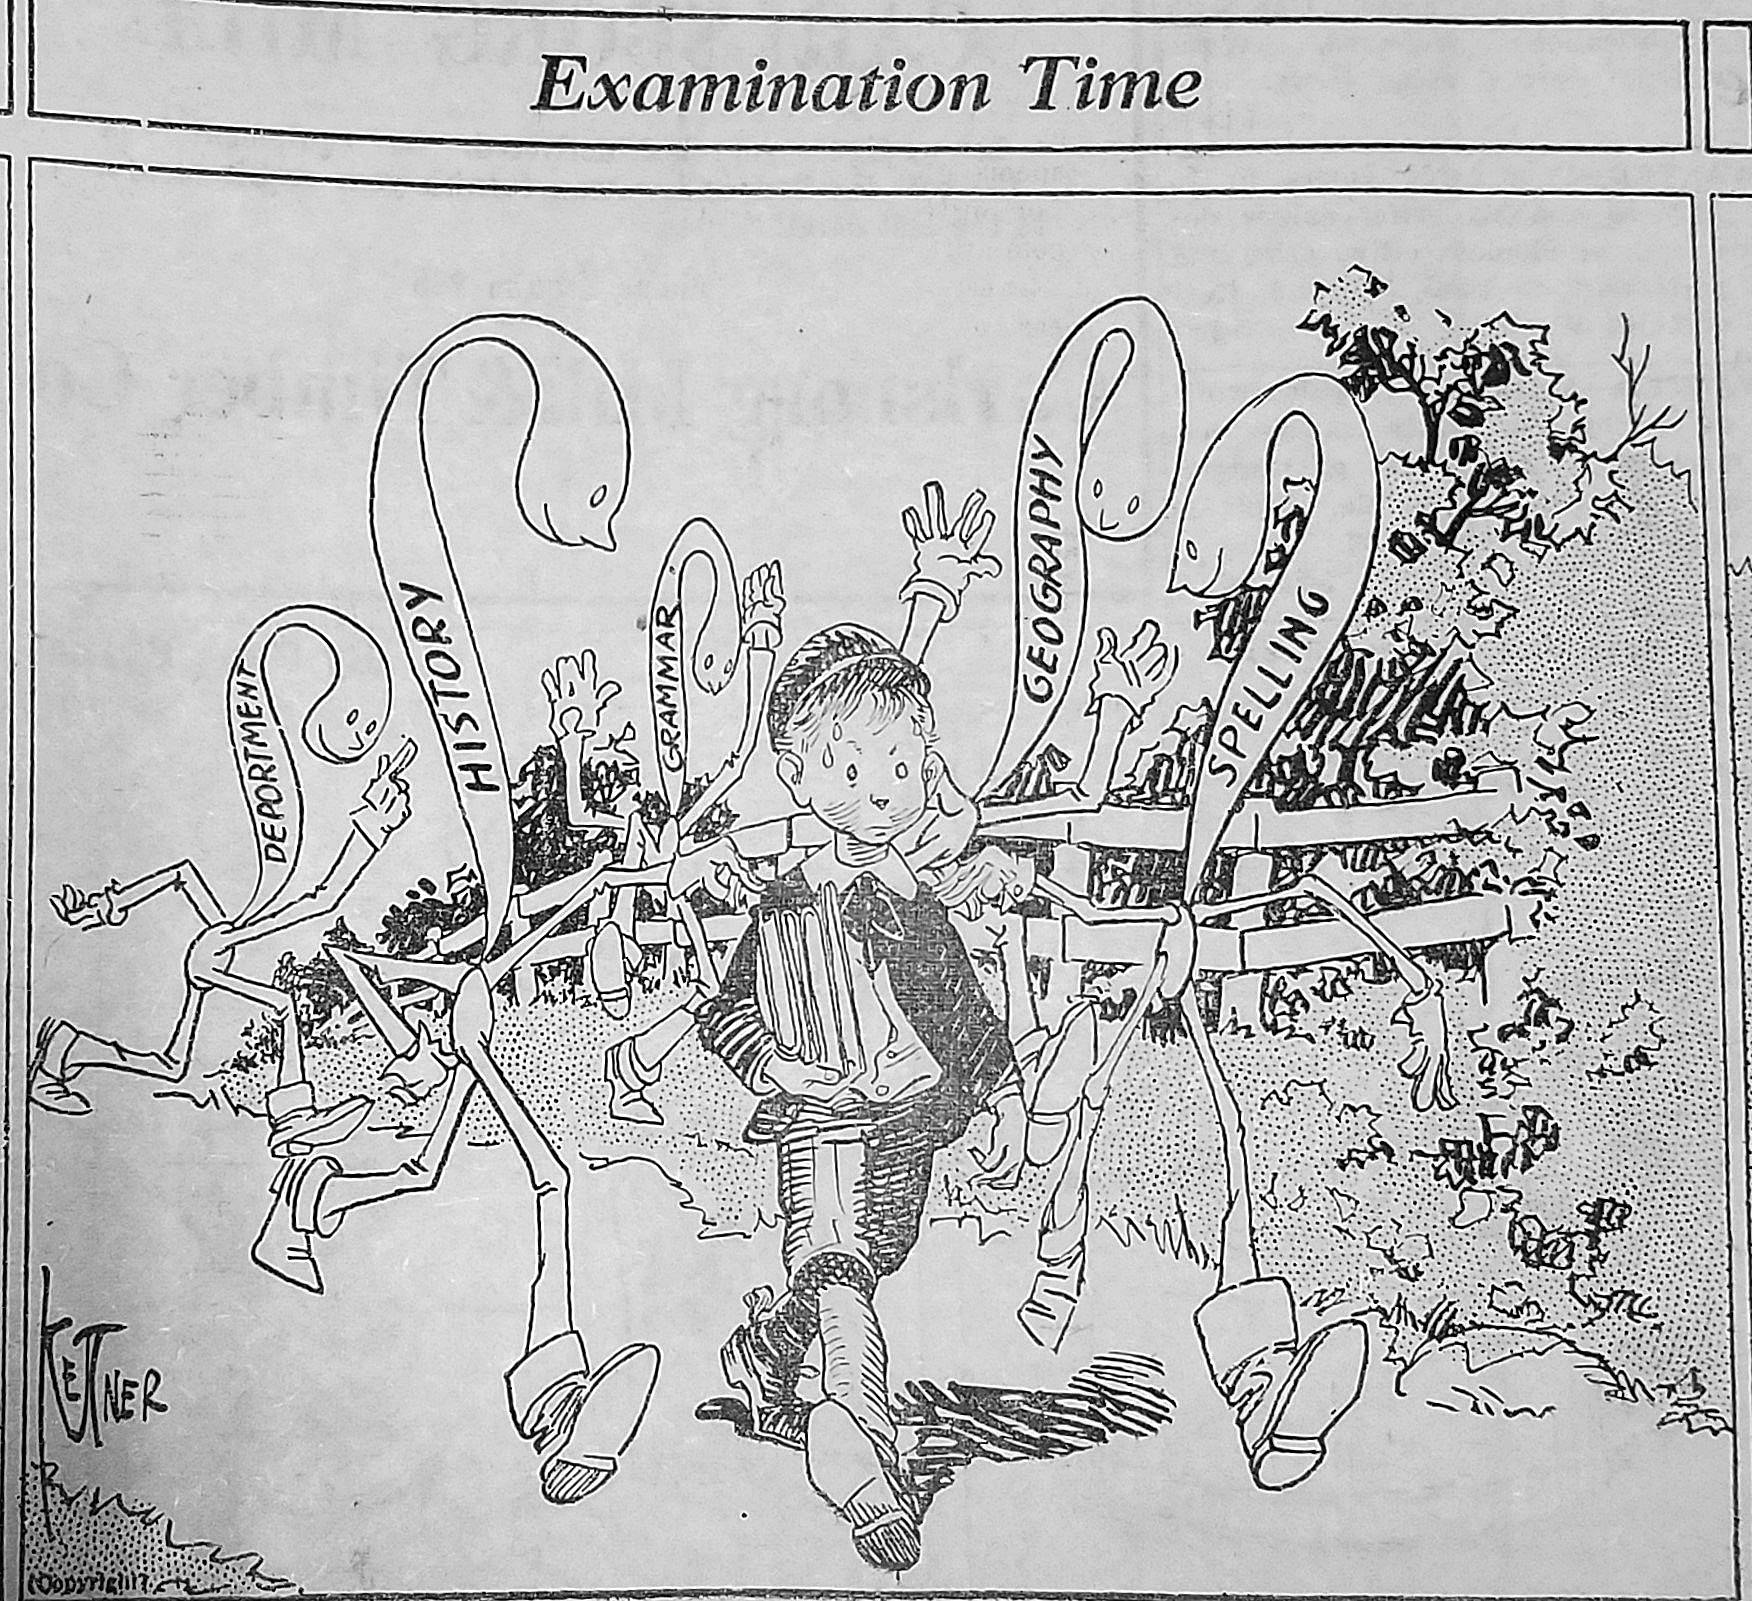 An editorial cartoon from June 1921, highlighting the stress students face. (Port Angeles Evening News)